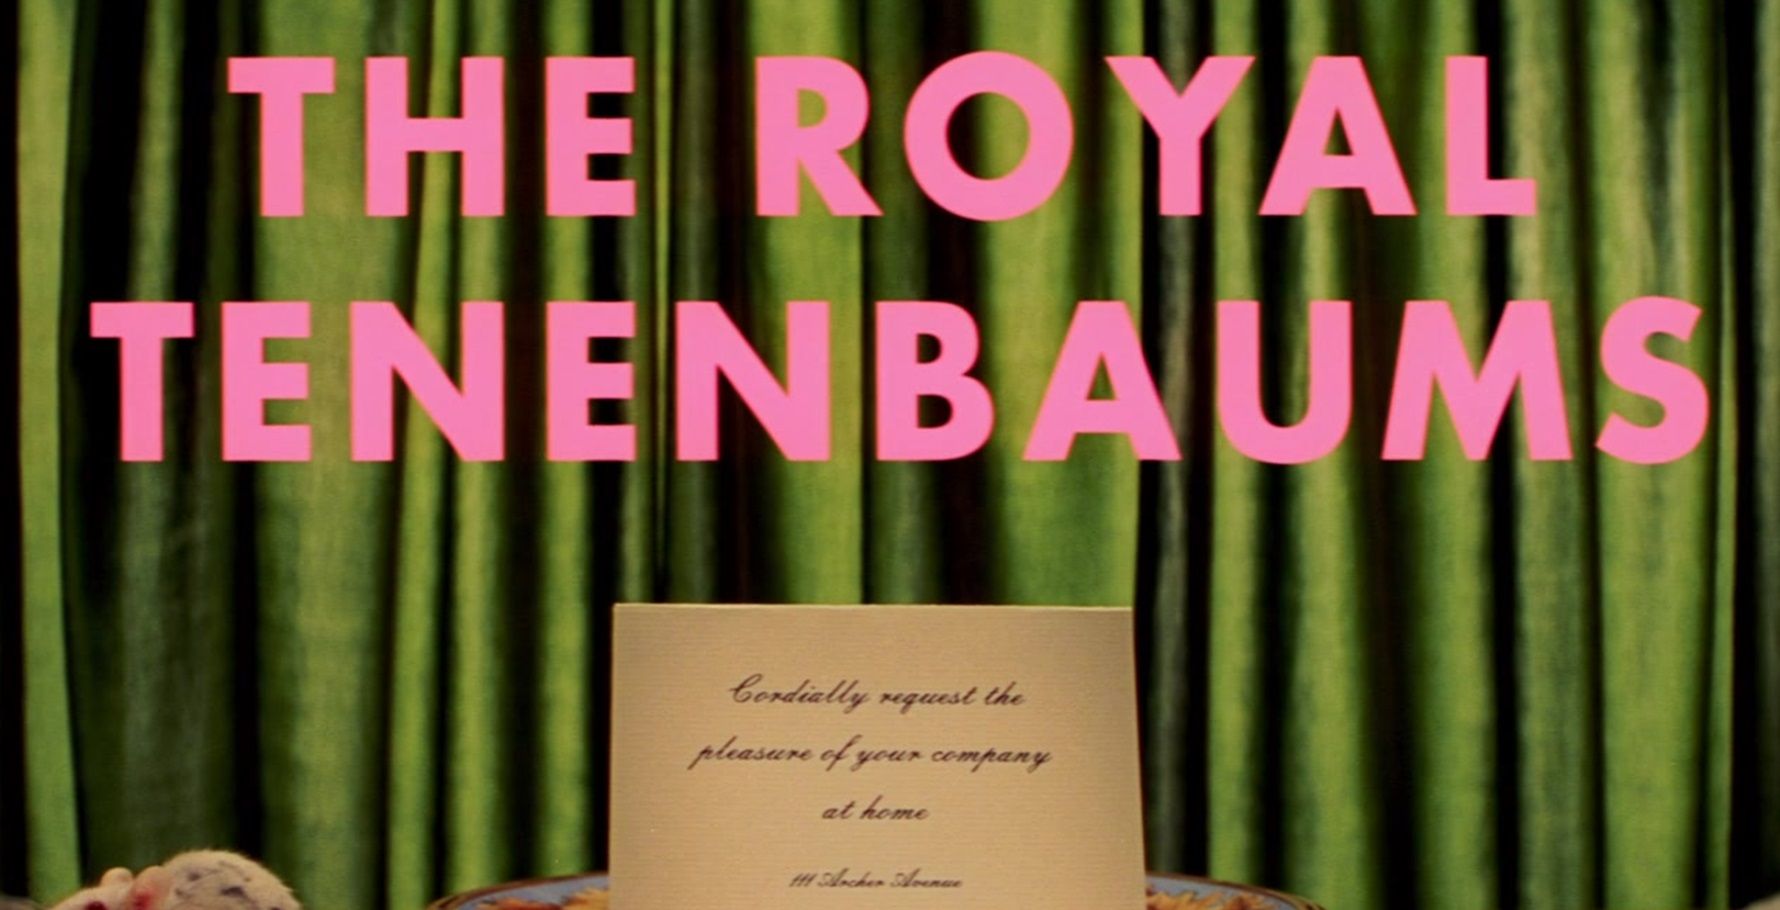 10 Tragicomic Family Sagas To Watch If You Like The Royal Tenenbaums